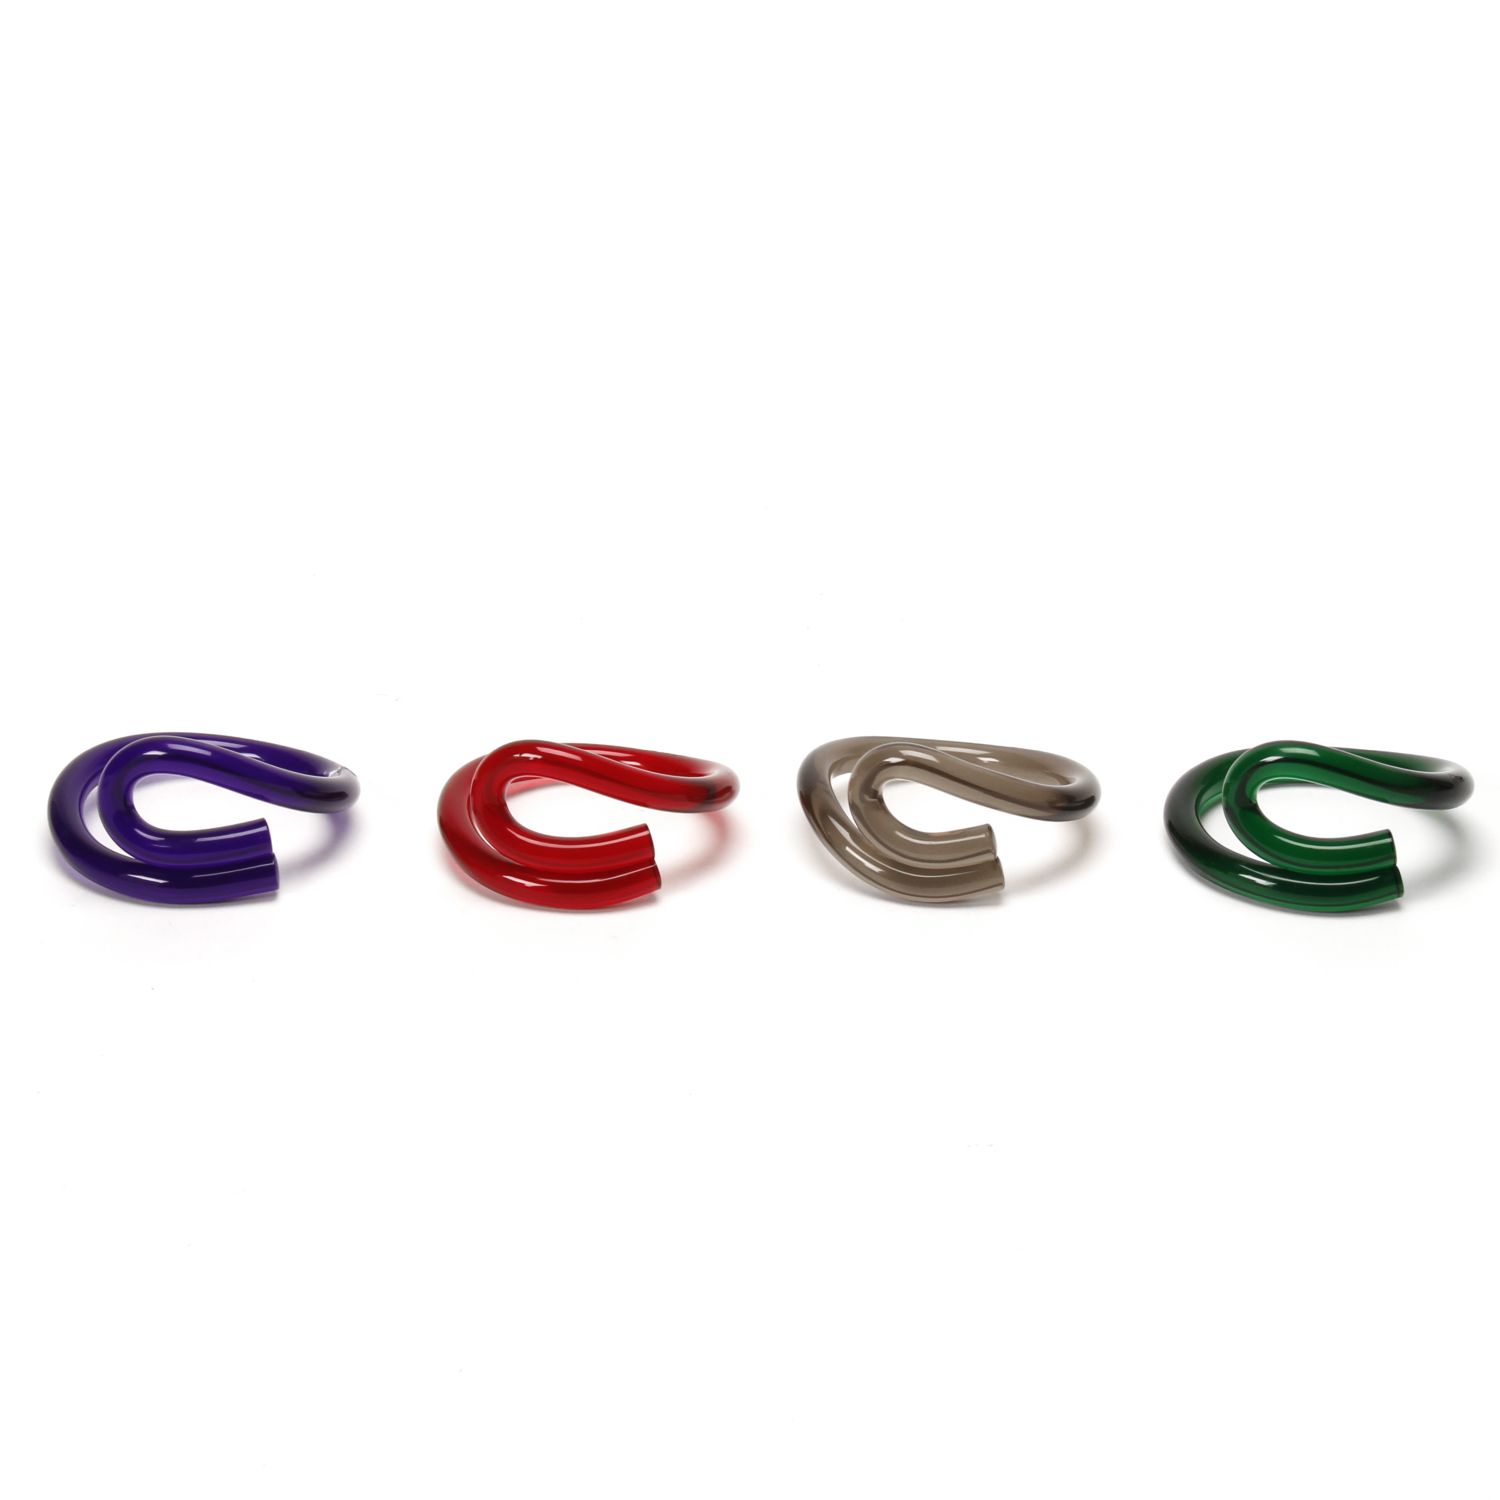 Corey Moranis: Loop Bracelet Smoke Product Image 3 of 4